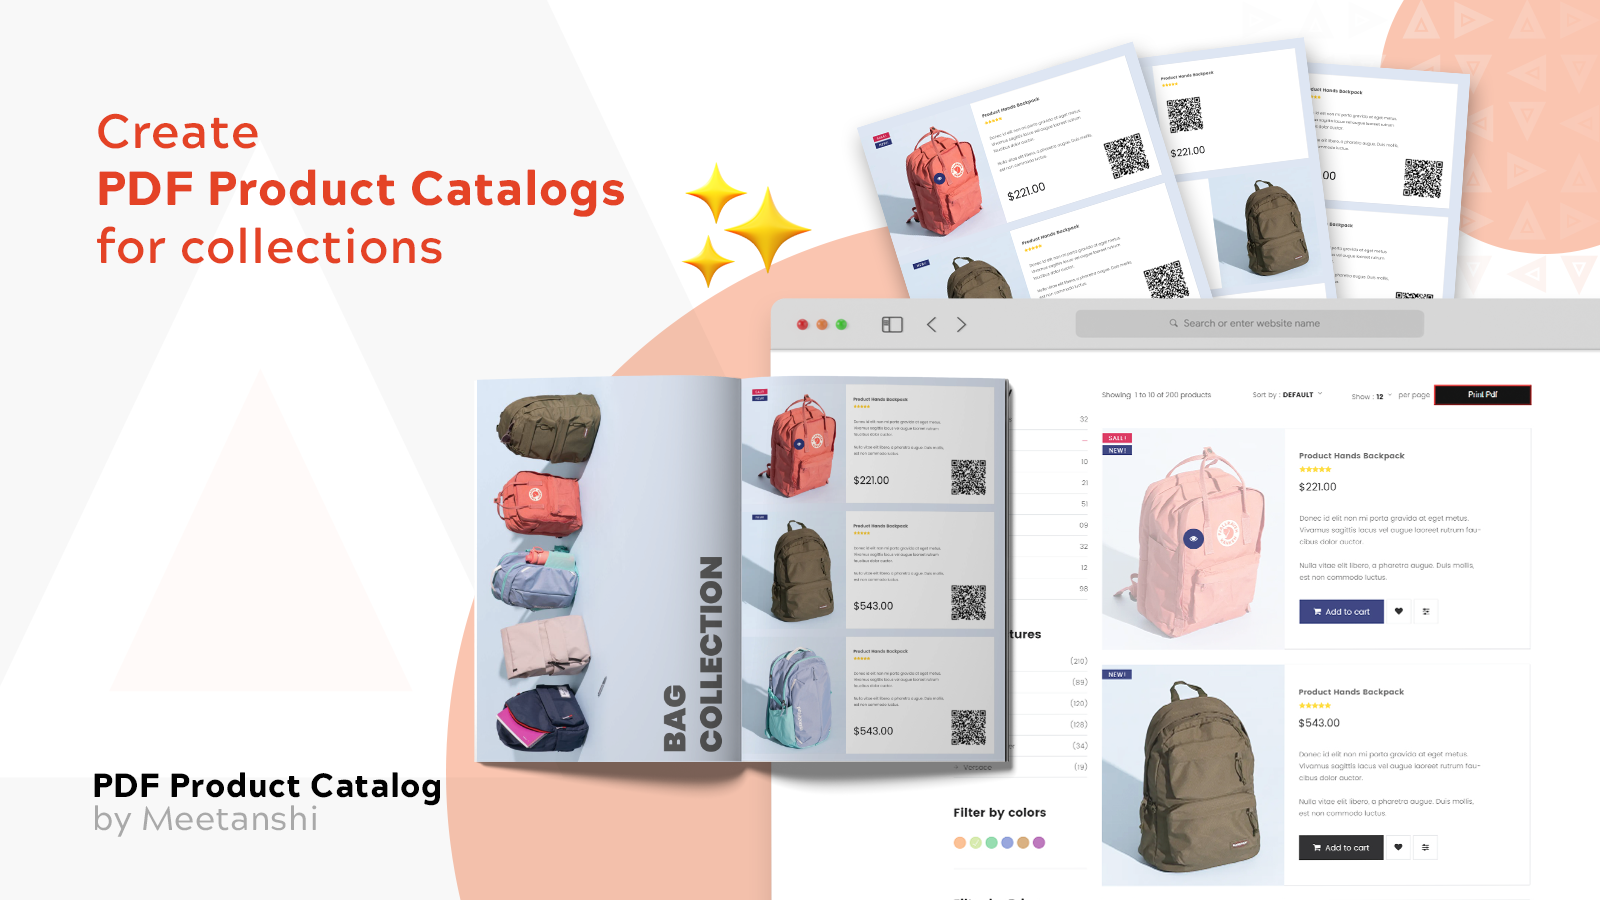 Meetanshi PDF Product Catalog